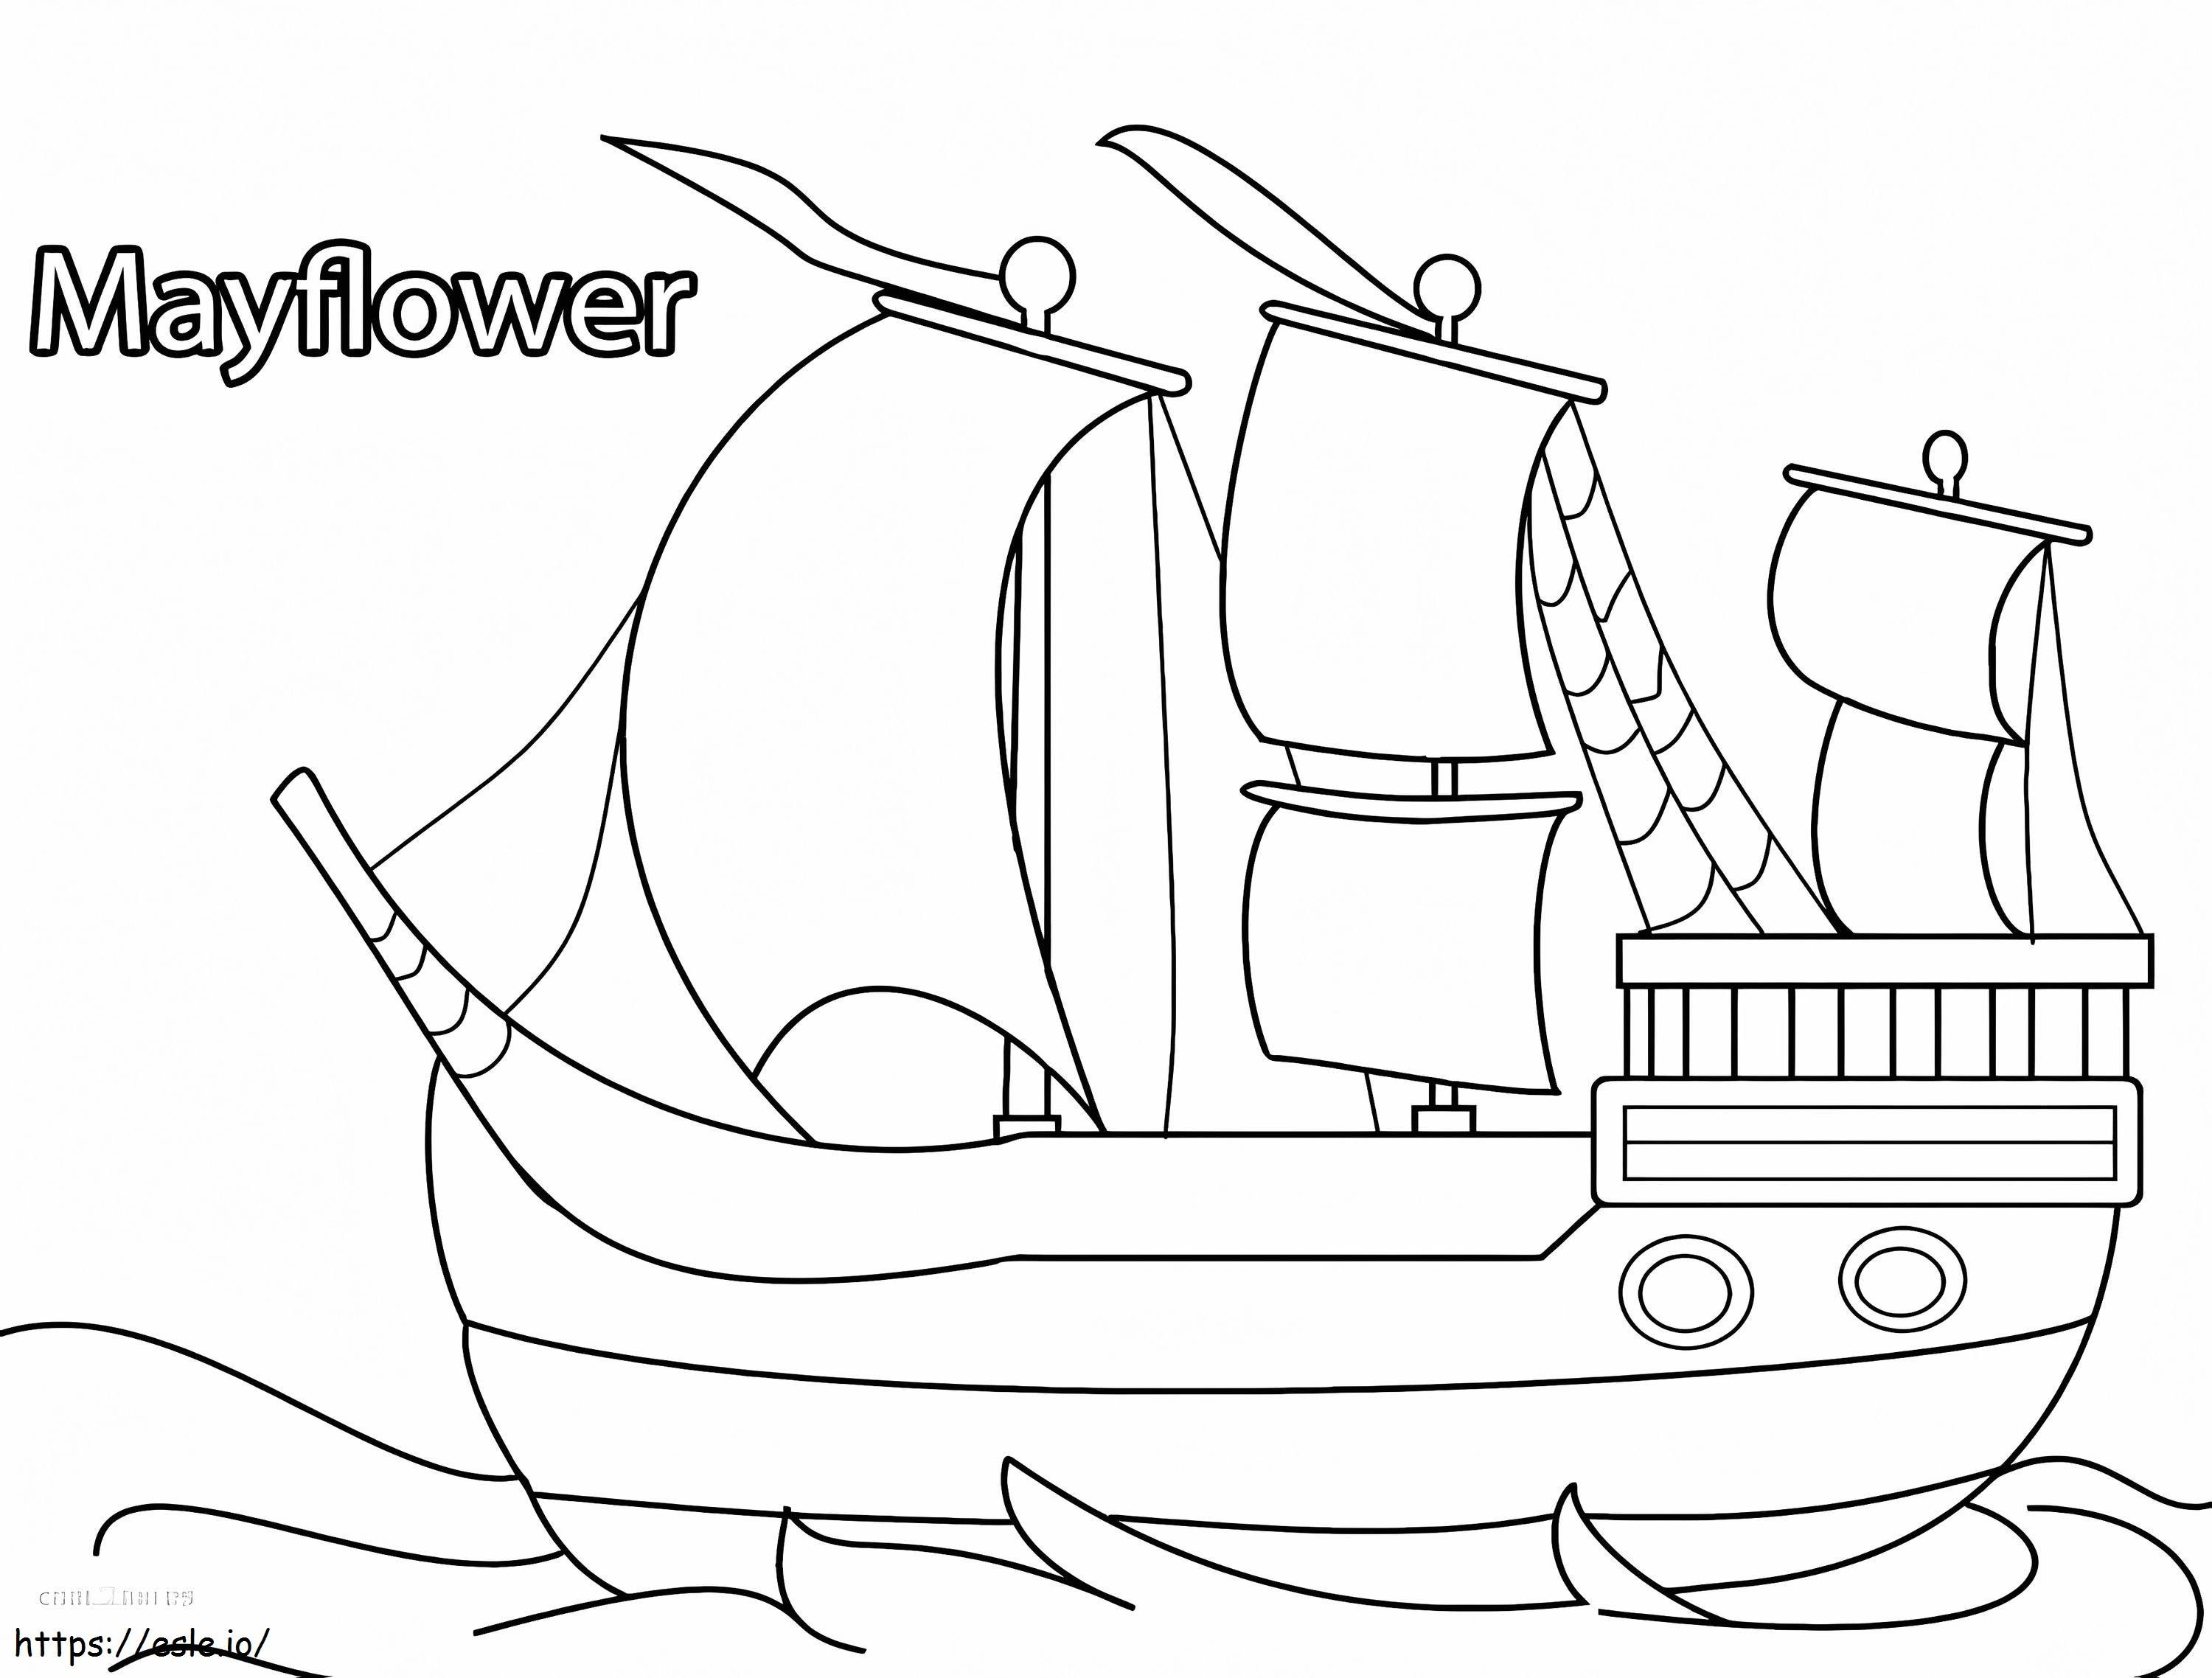 Mayflower 4 kolorowanka